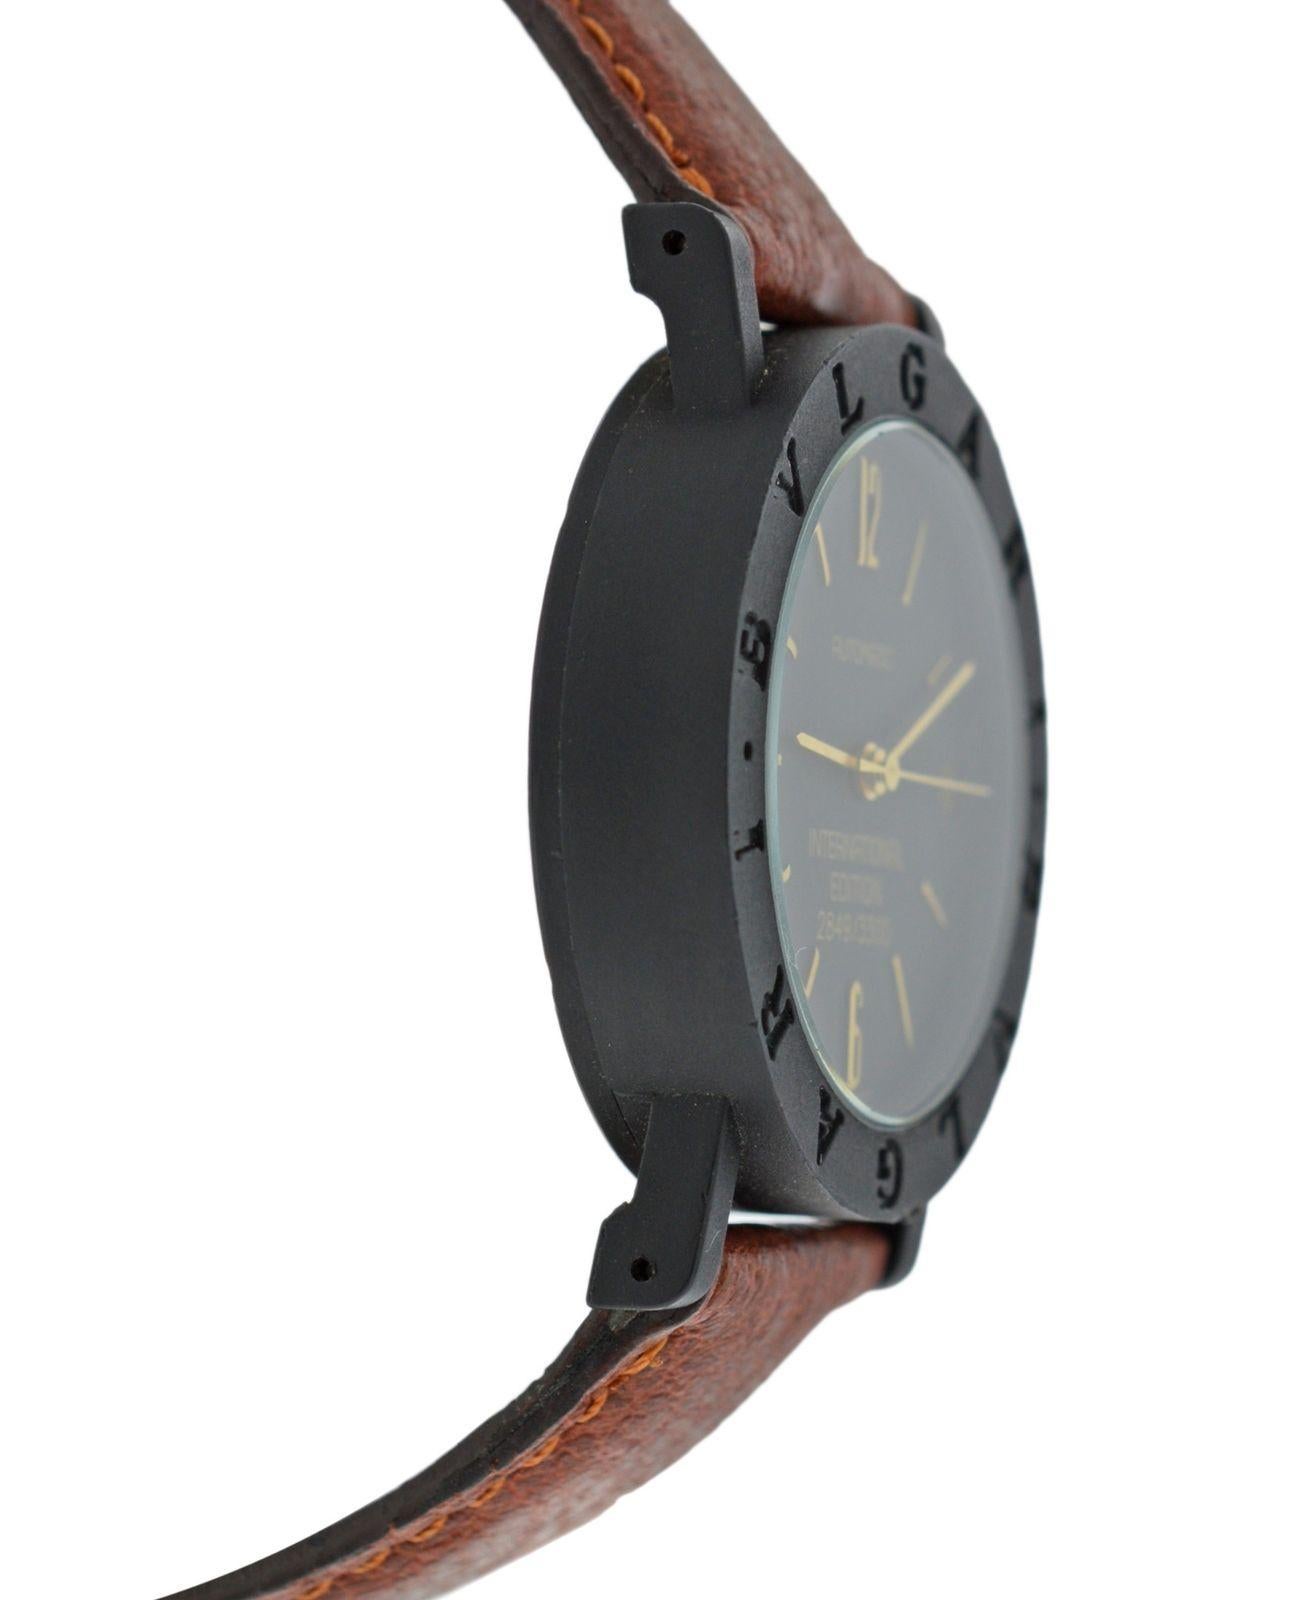 bvlgari limited edition watch